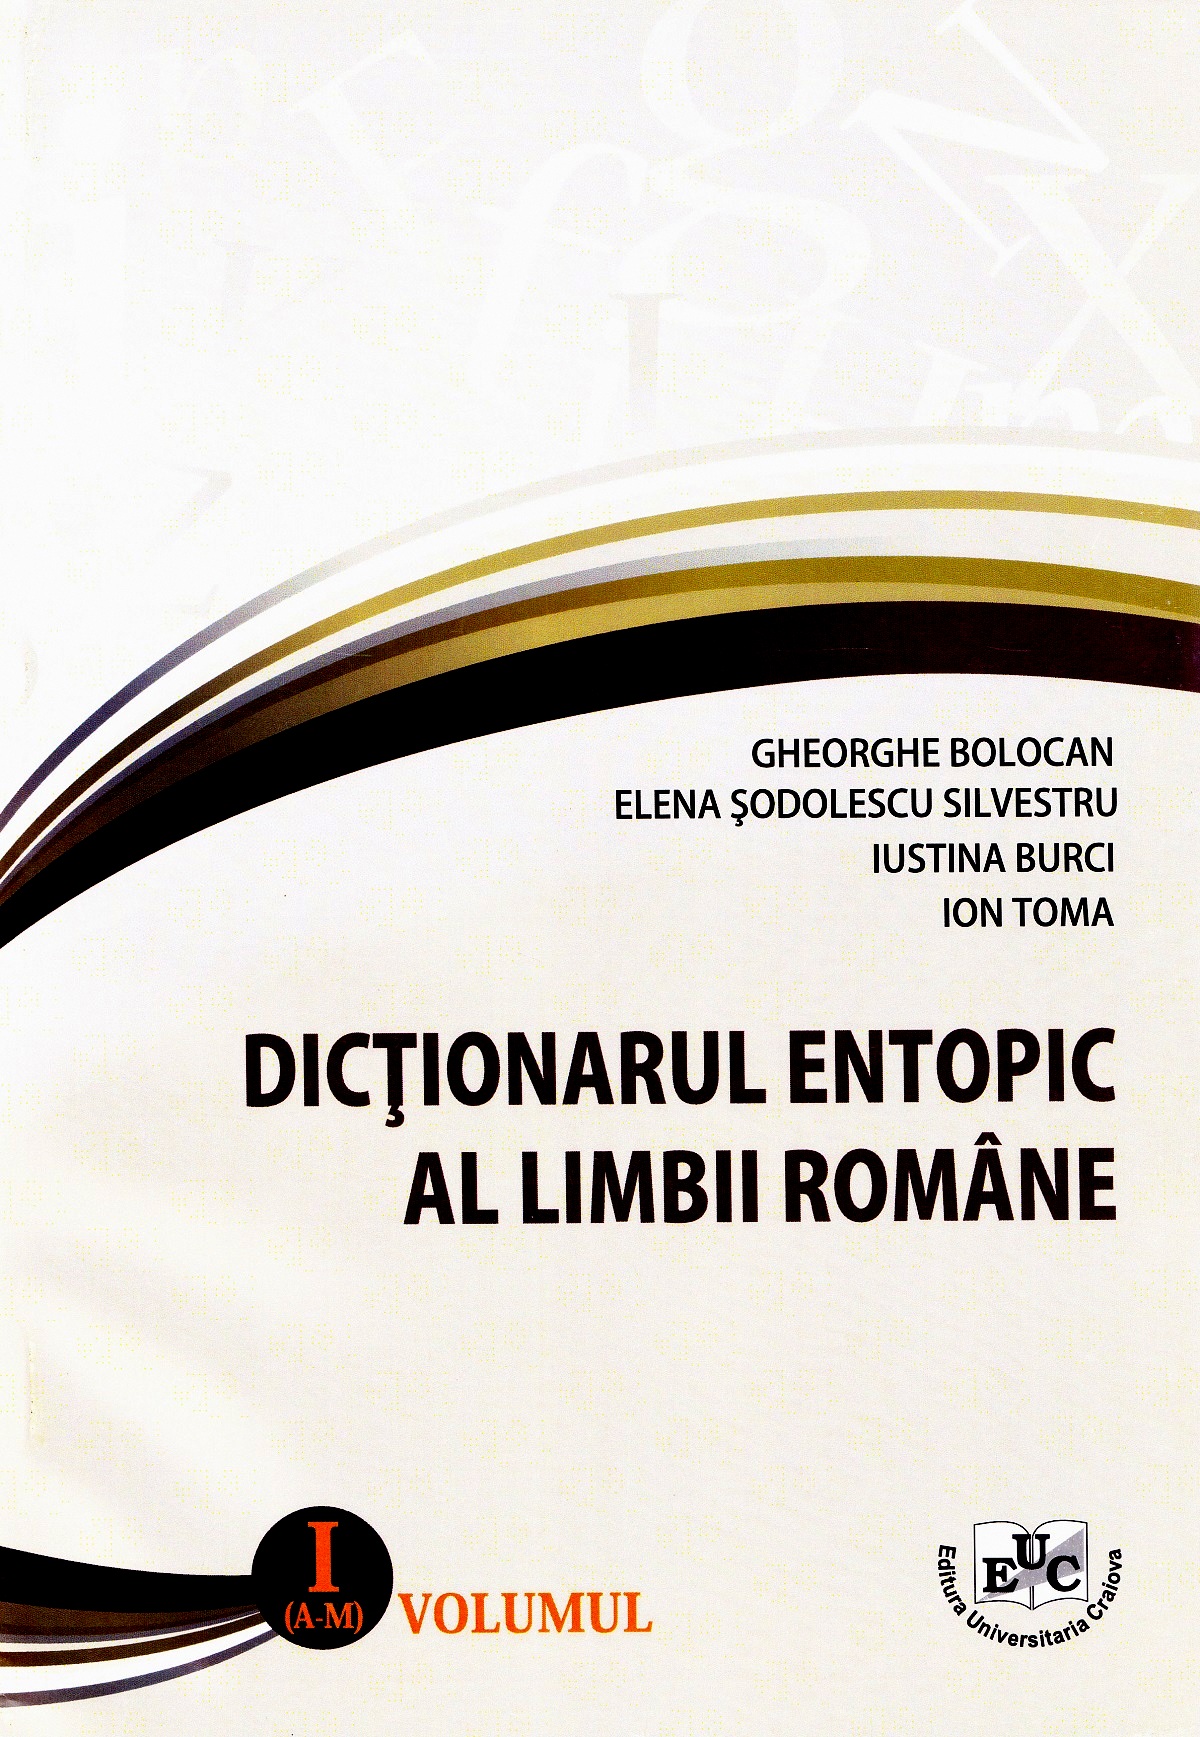 Dictionar entopic al limbii romane. Vol.1 - Gheorghe Bolocan, Sodolescu Silvestru Elena